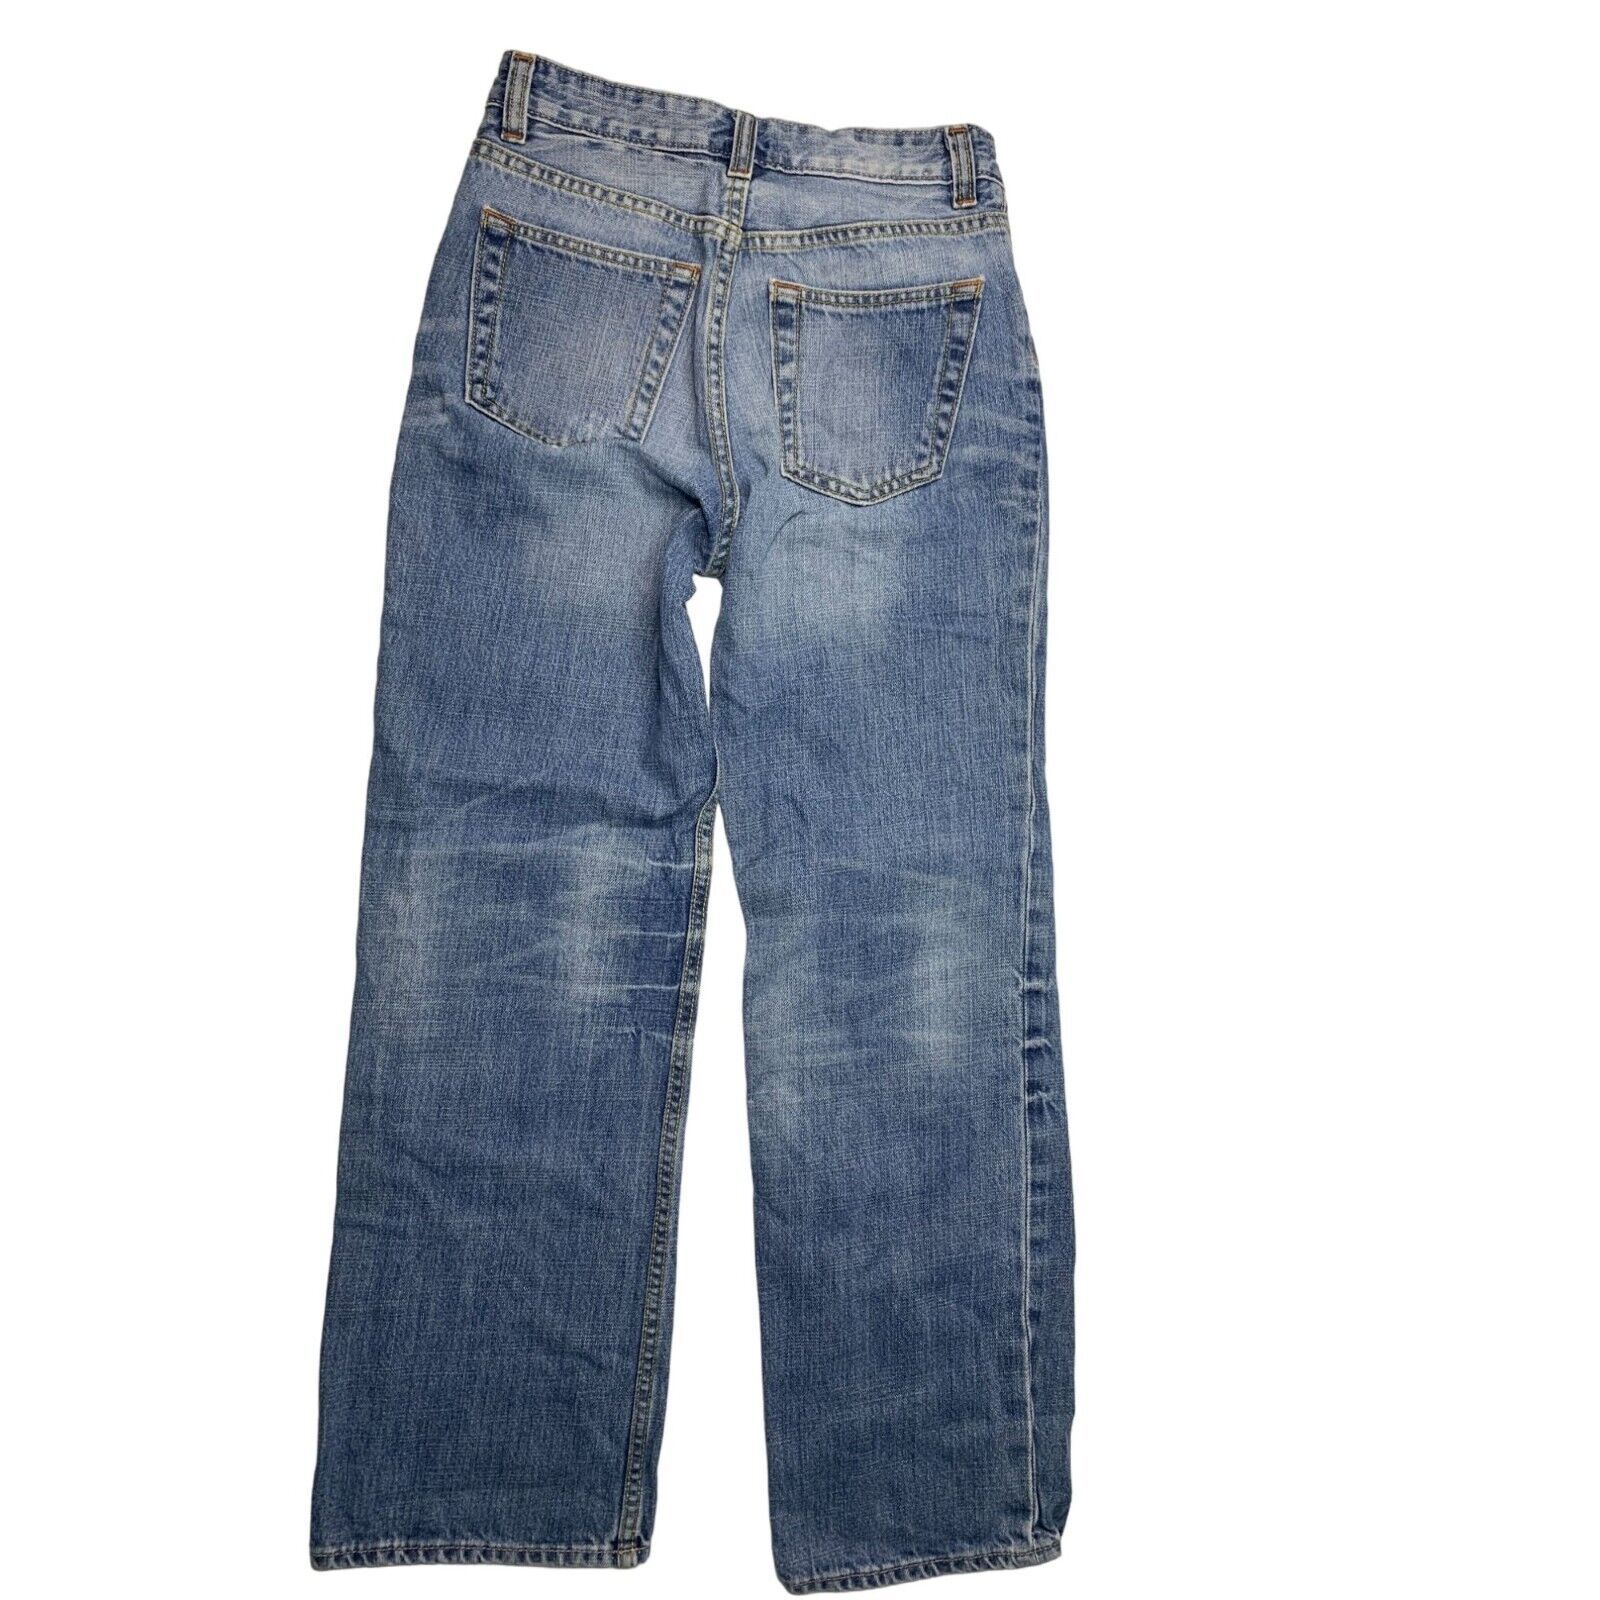 Gap Denim Boys Siz 14 R Original Fit Distressed Jean Denim Jeans LIght Wash Stra - $12.86